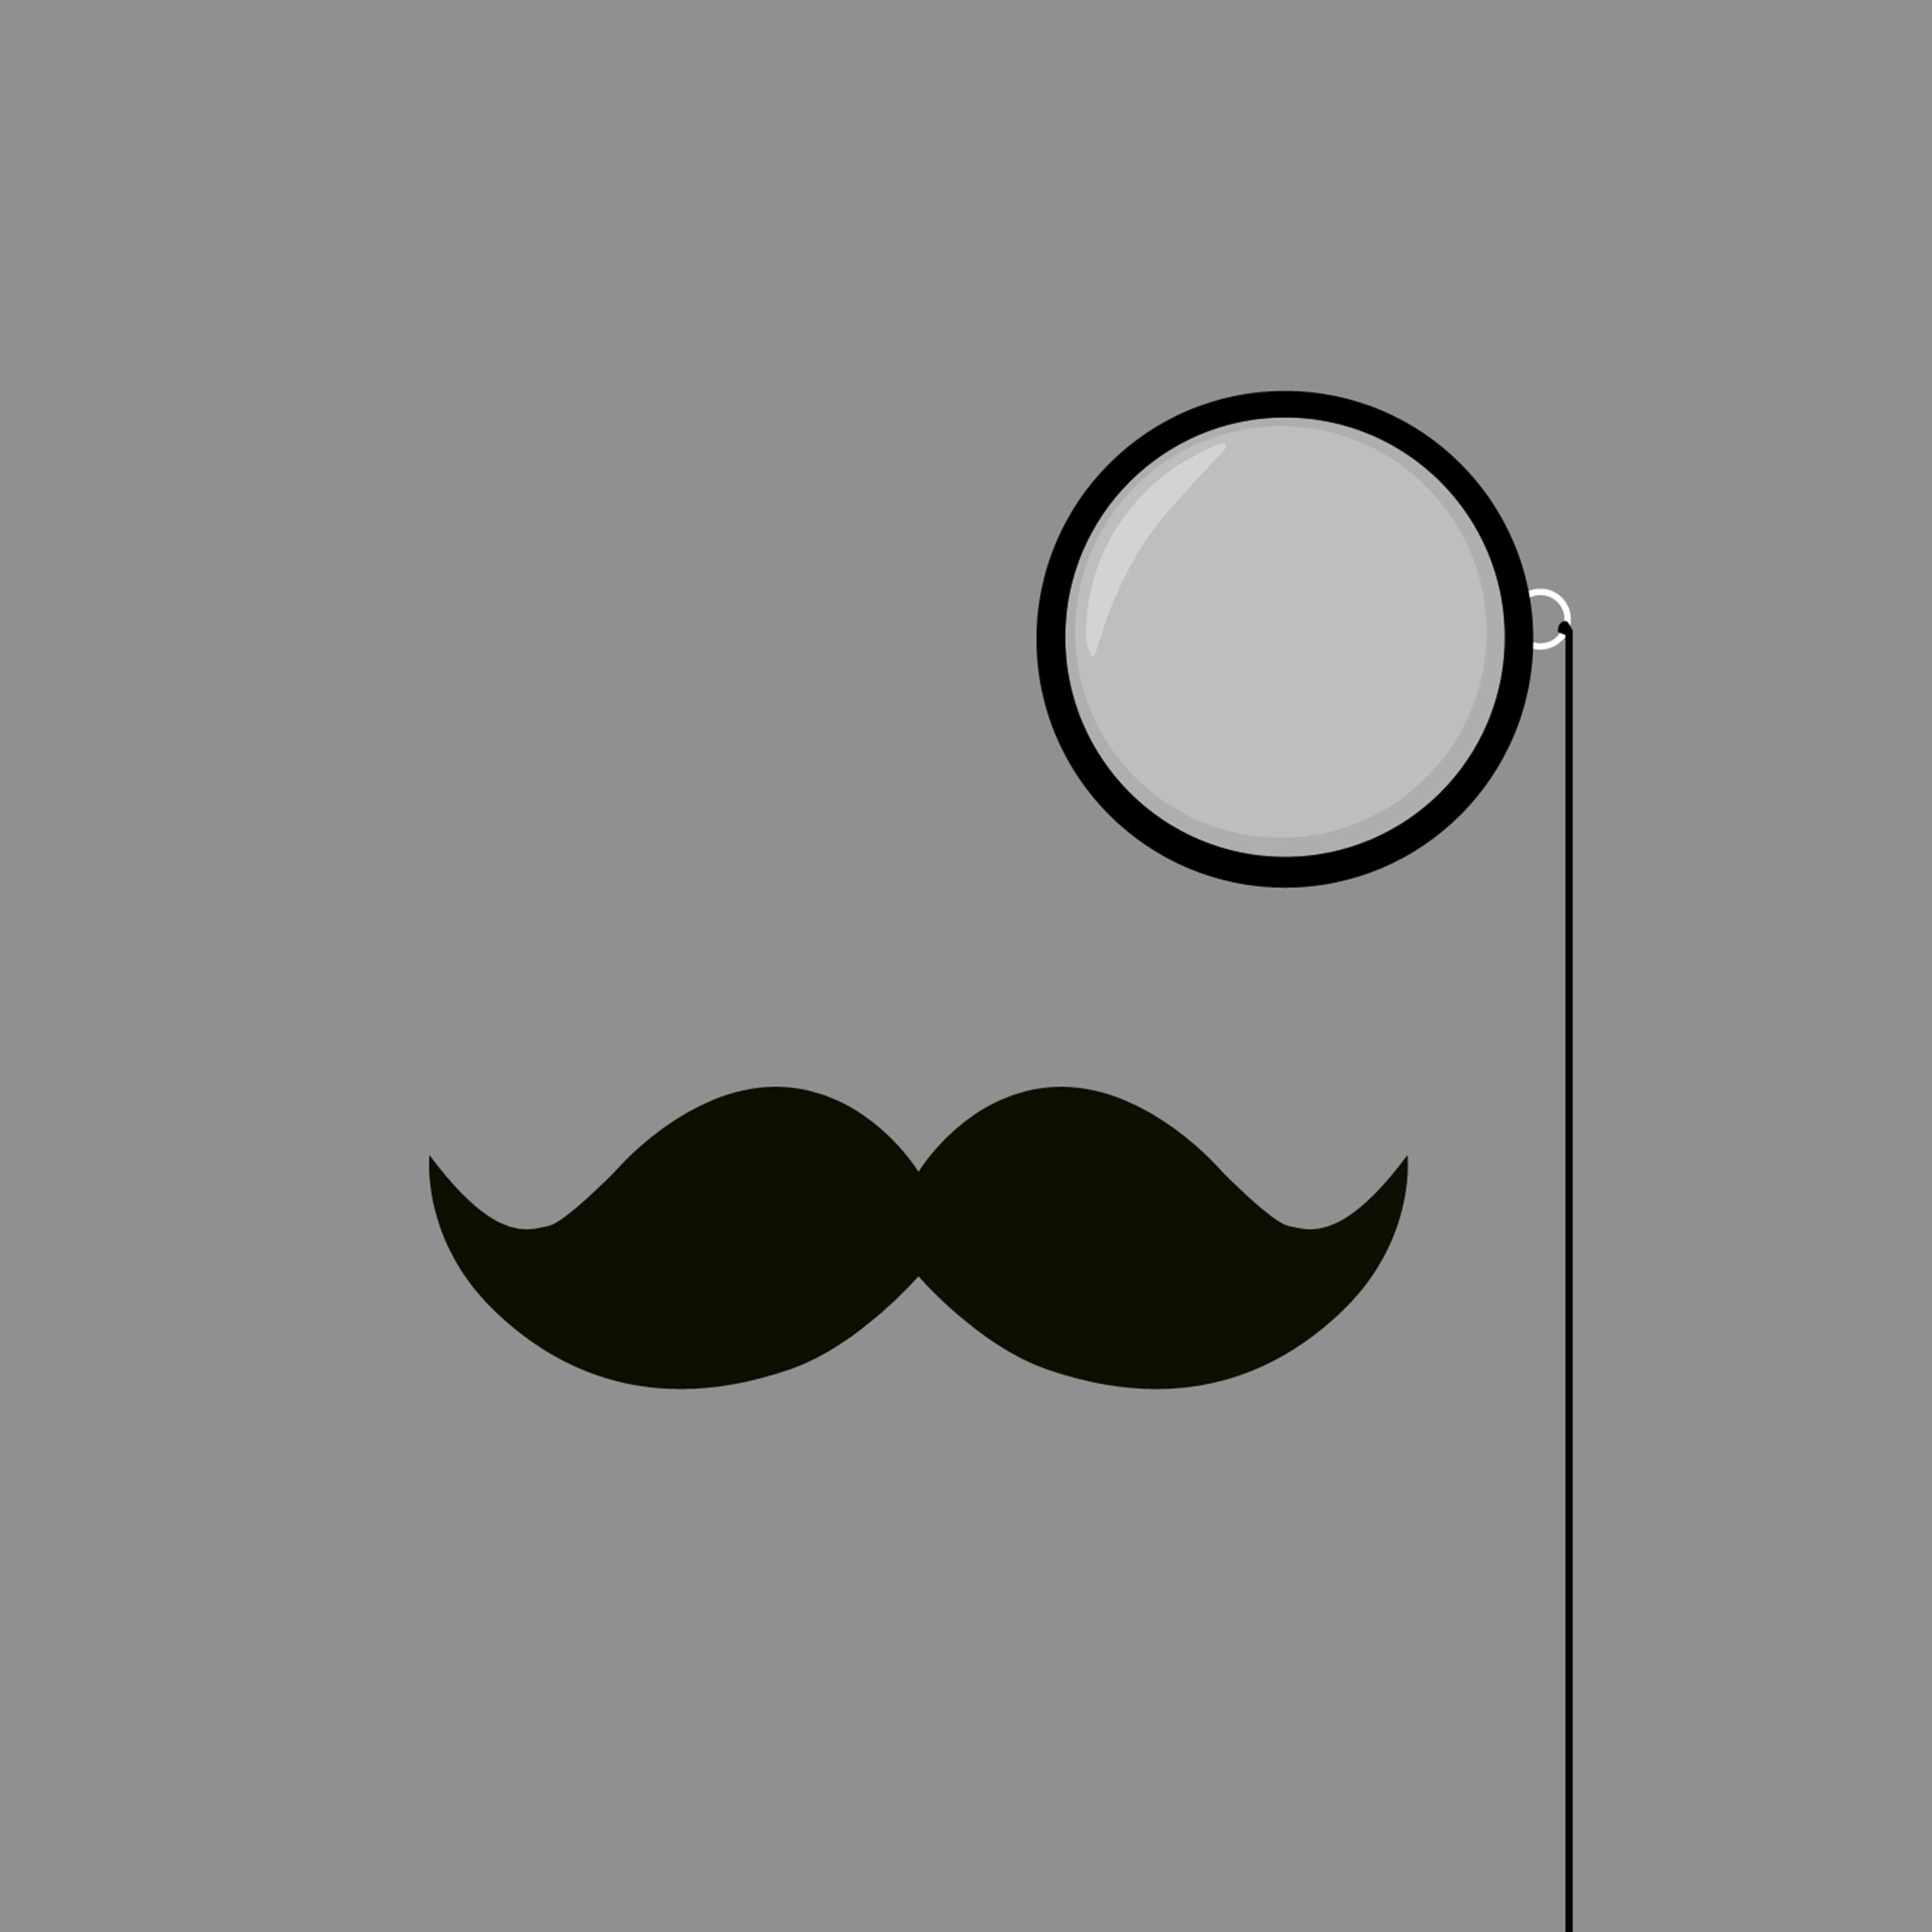 2048x2048 Classy Mustache and Monocle iPad Wallpaper HD #iPad #wallpaper